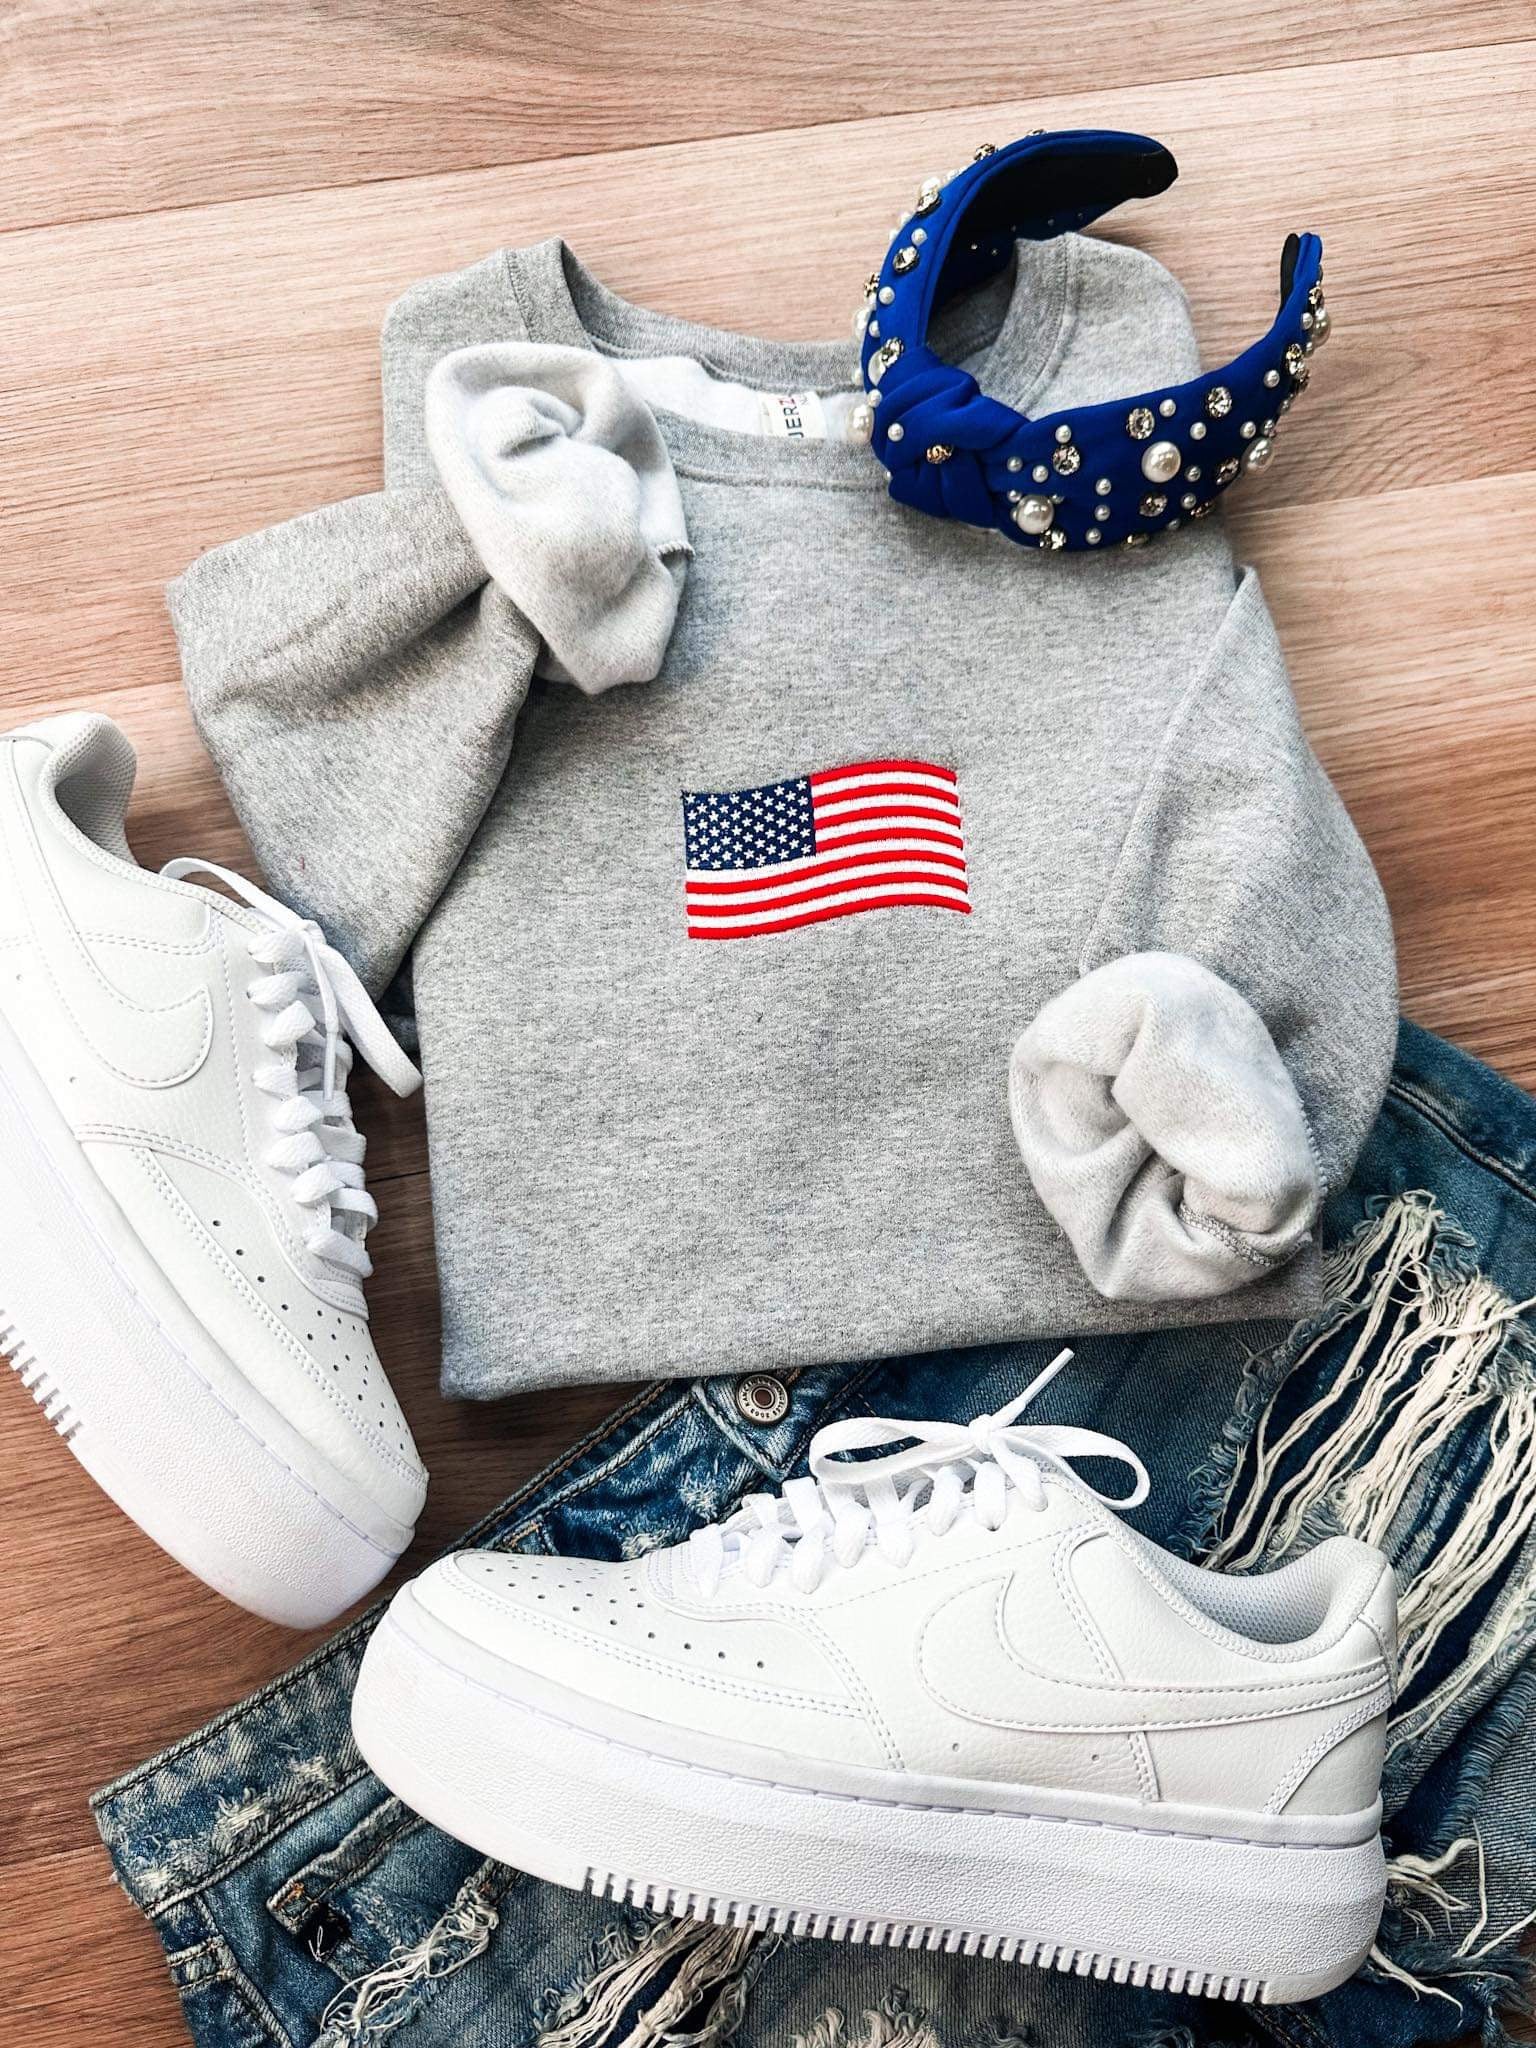 **PREORDER** USA Flag Embroidered Grey Sweatshirt